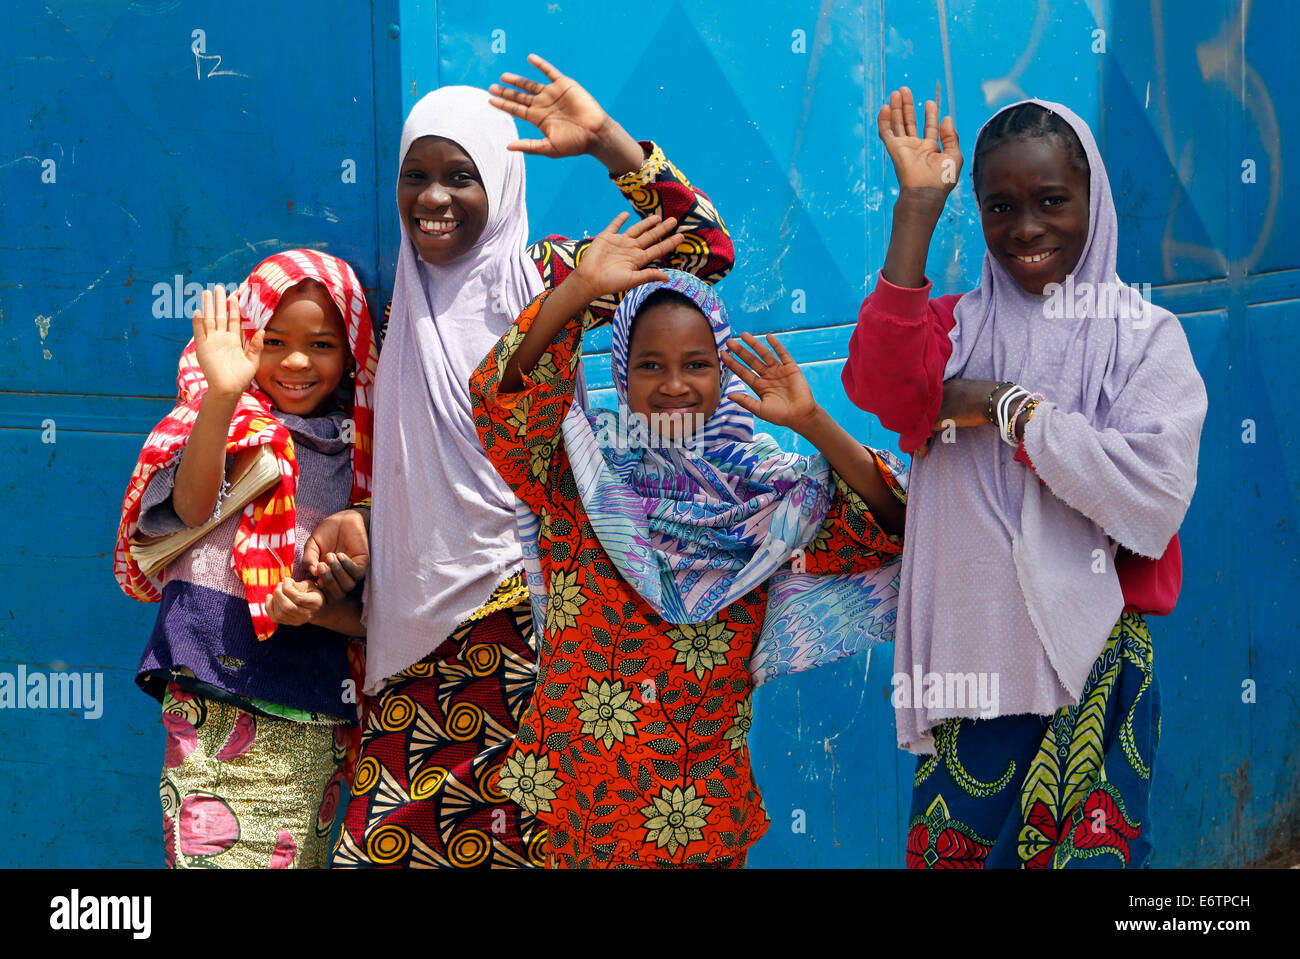 young girl wearing headscarfs, hijabs waving to the photographer. Dakar, Senegal Stock Photo